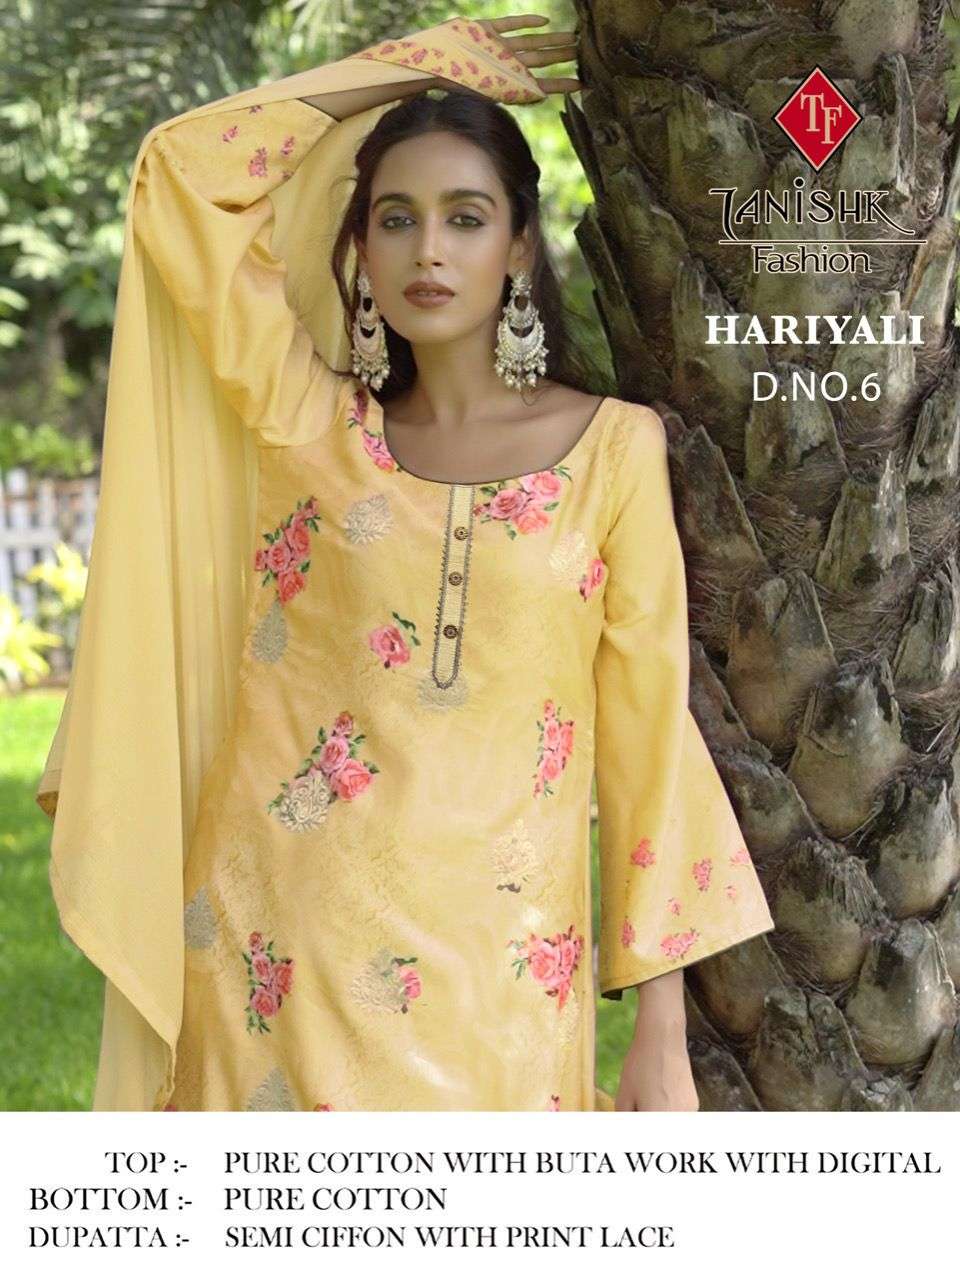 tanishk fashion hariyali pure cotton fancy embroidered salwar kameez wholesale price surat